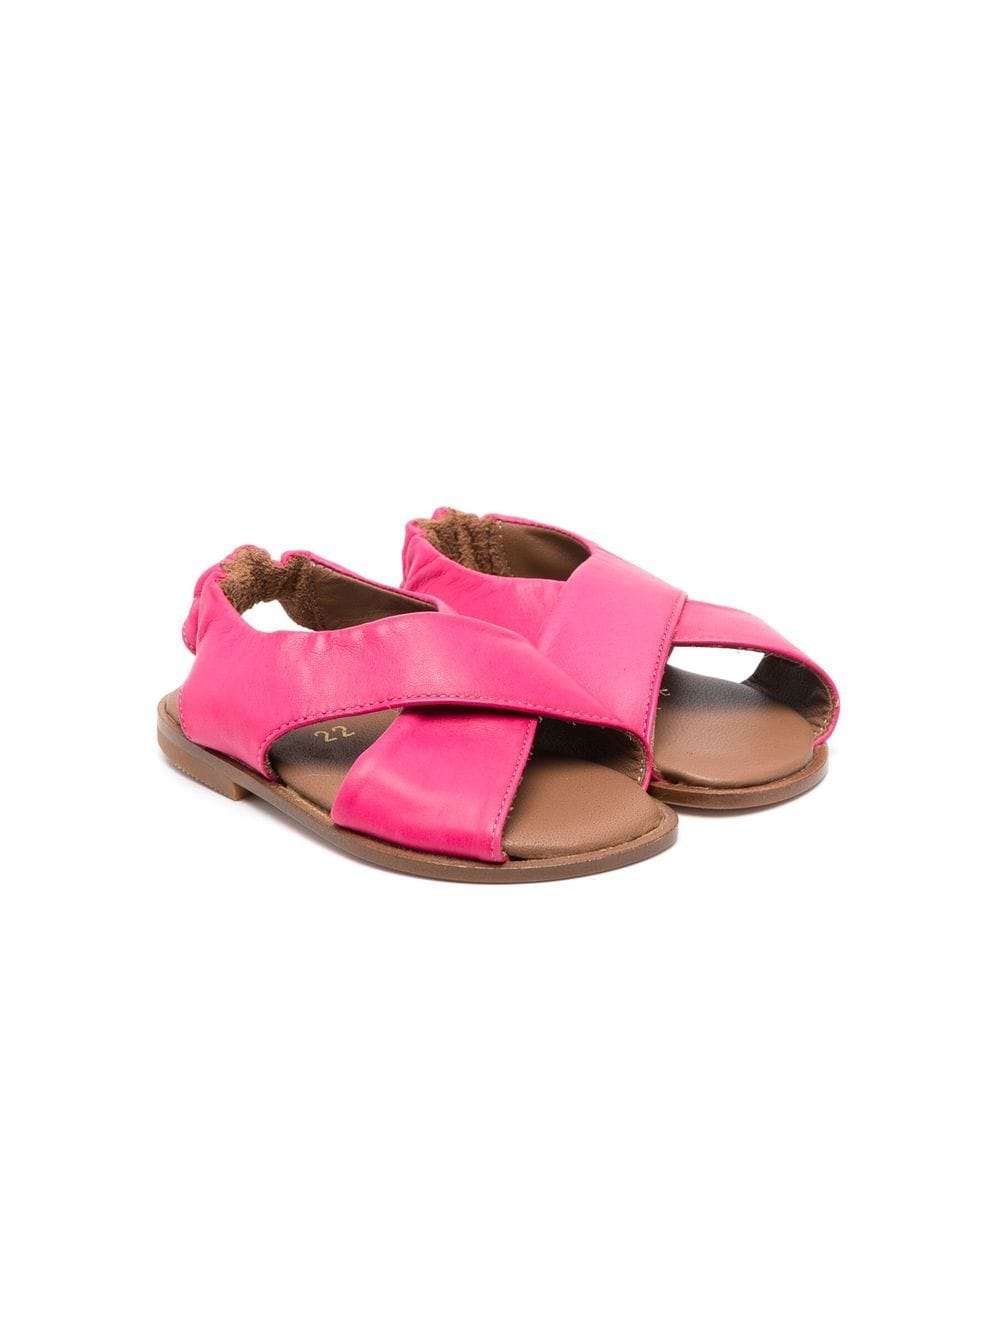 Pèpè open toe leather sandals - Pink von Pèpè